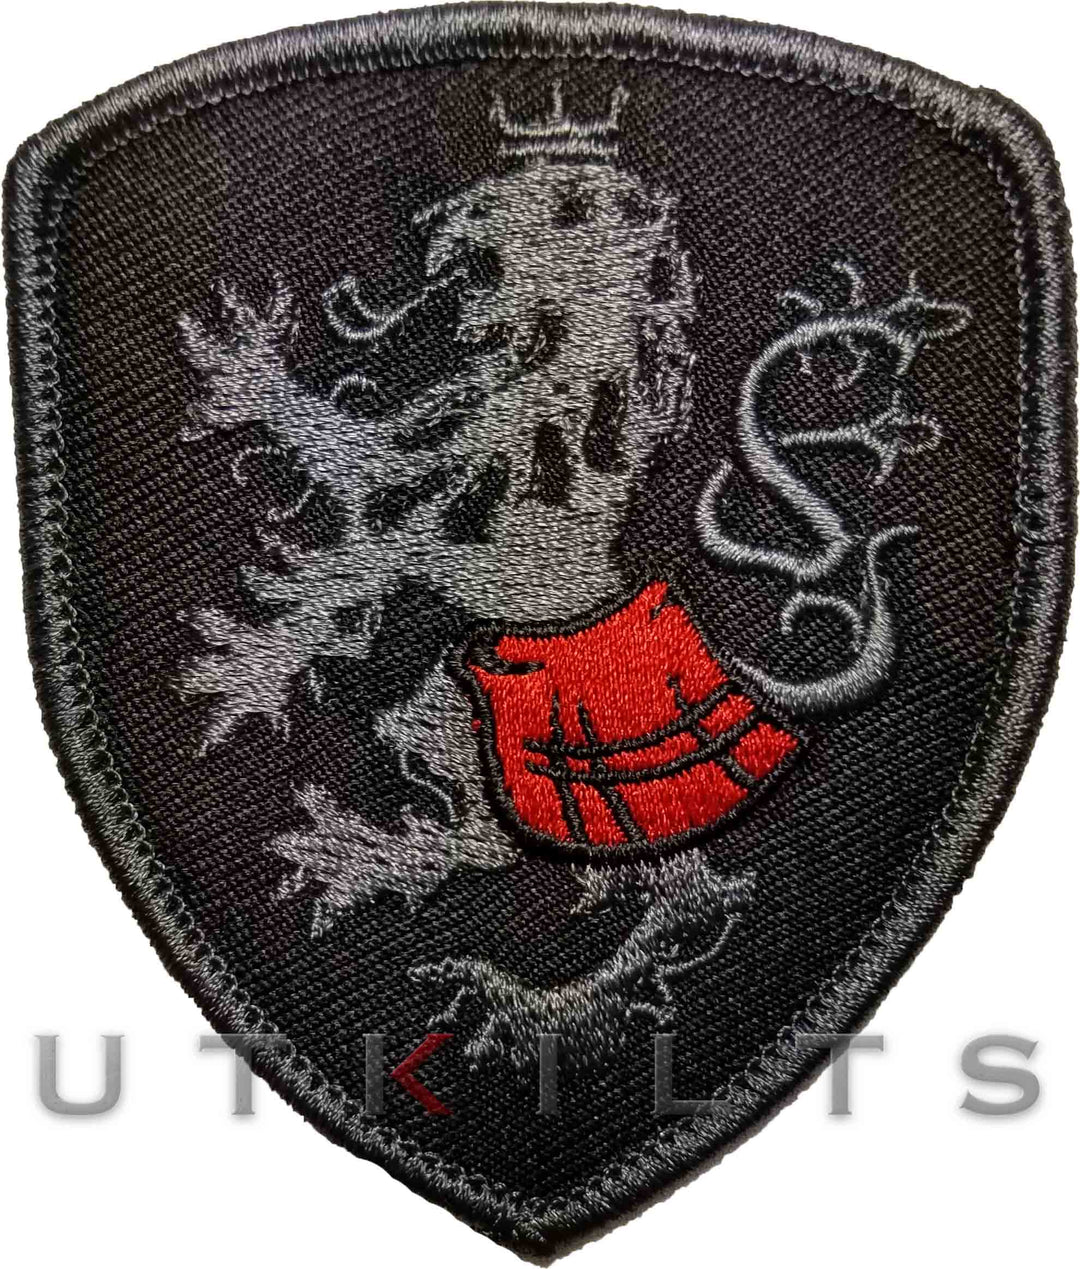 UT Kilts Logo Patch Iron On